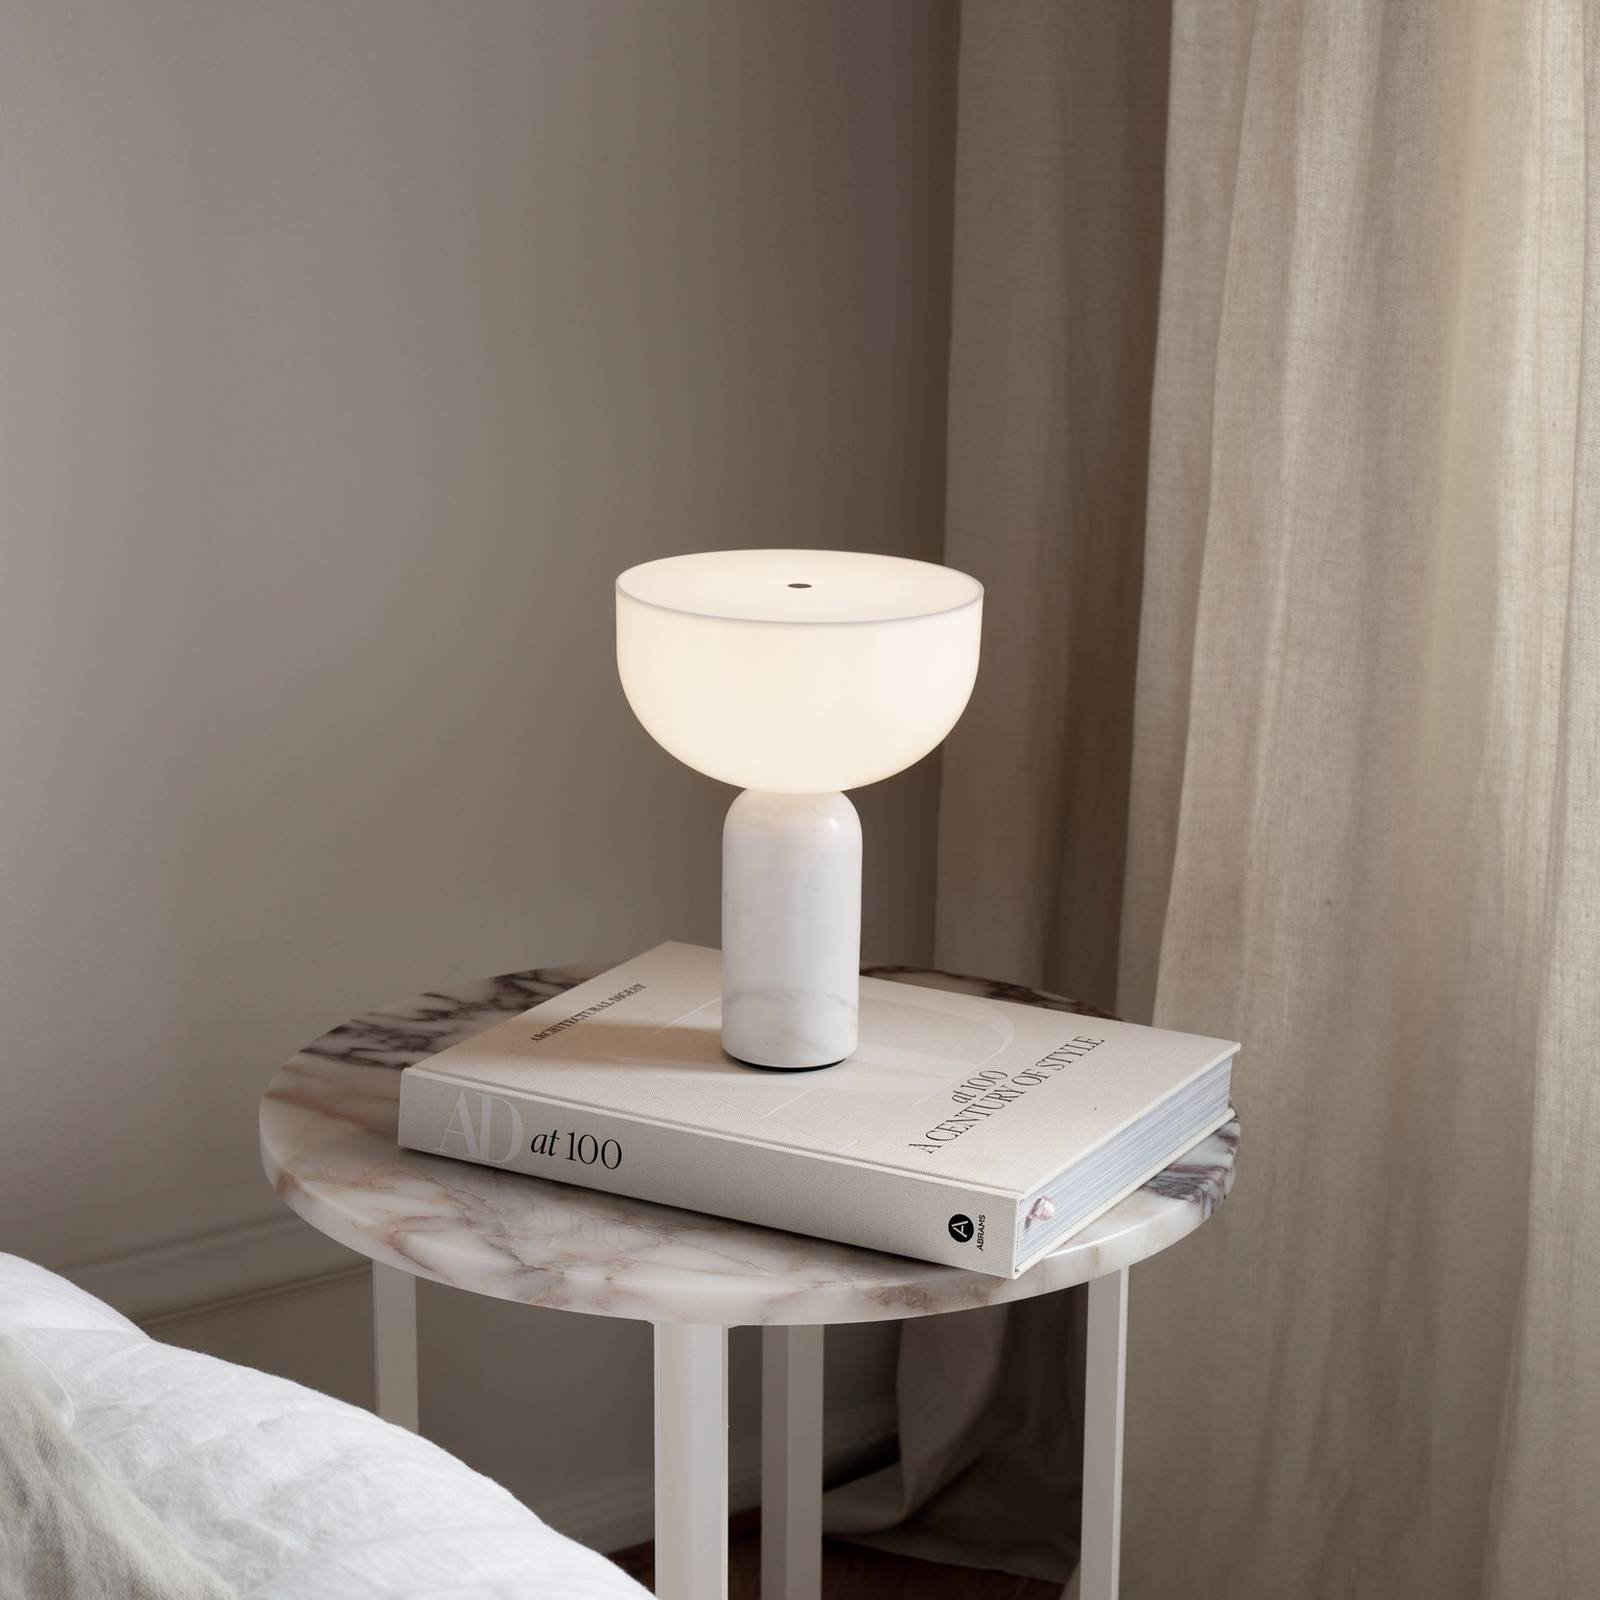 Image of New Works Kizu lampe à poser batterie blanche 5712826217108